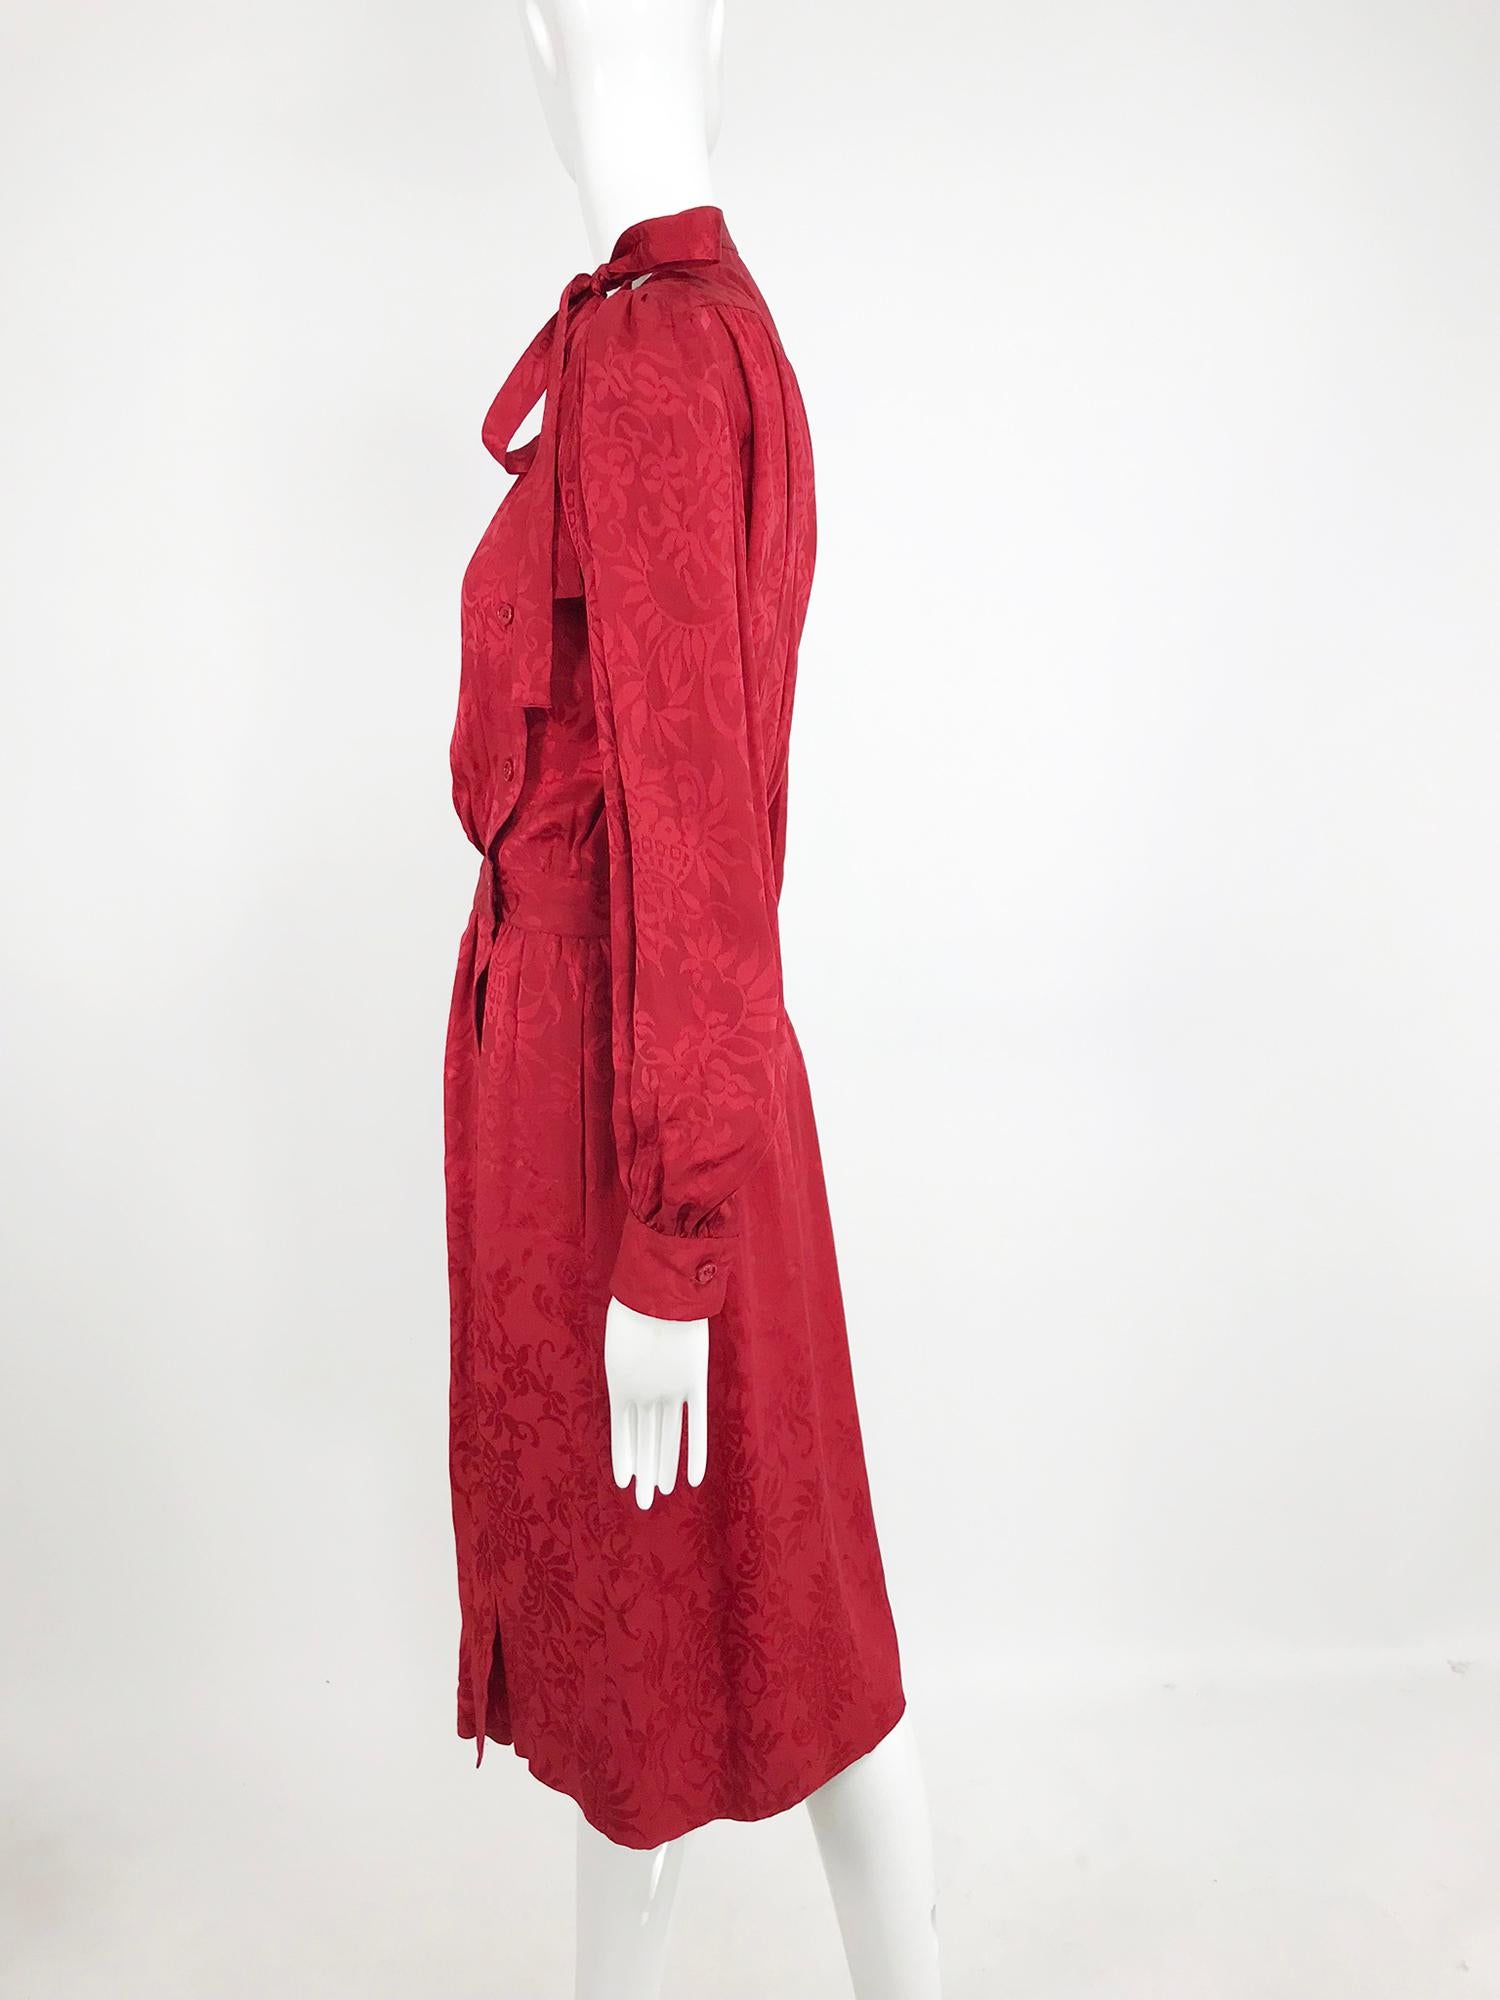 Yves Saint Laurent Red Silk Jacquard Bow Tie Dress 1970s 9